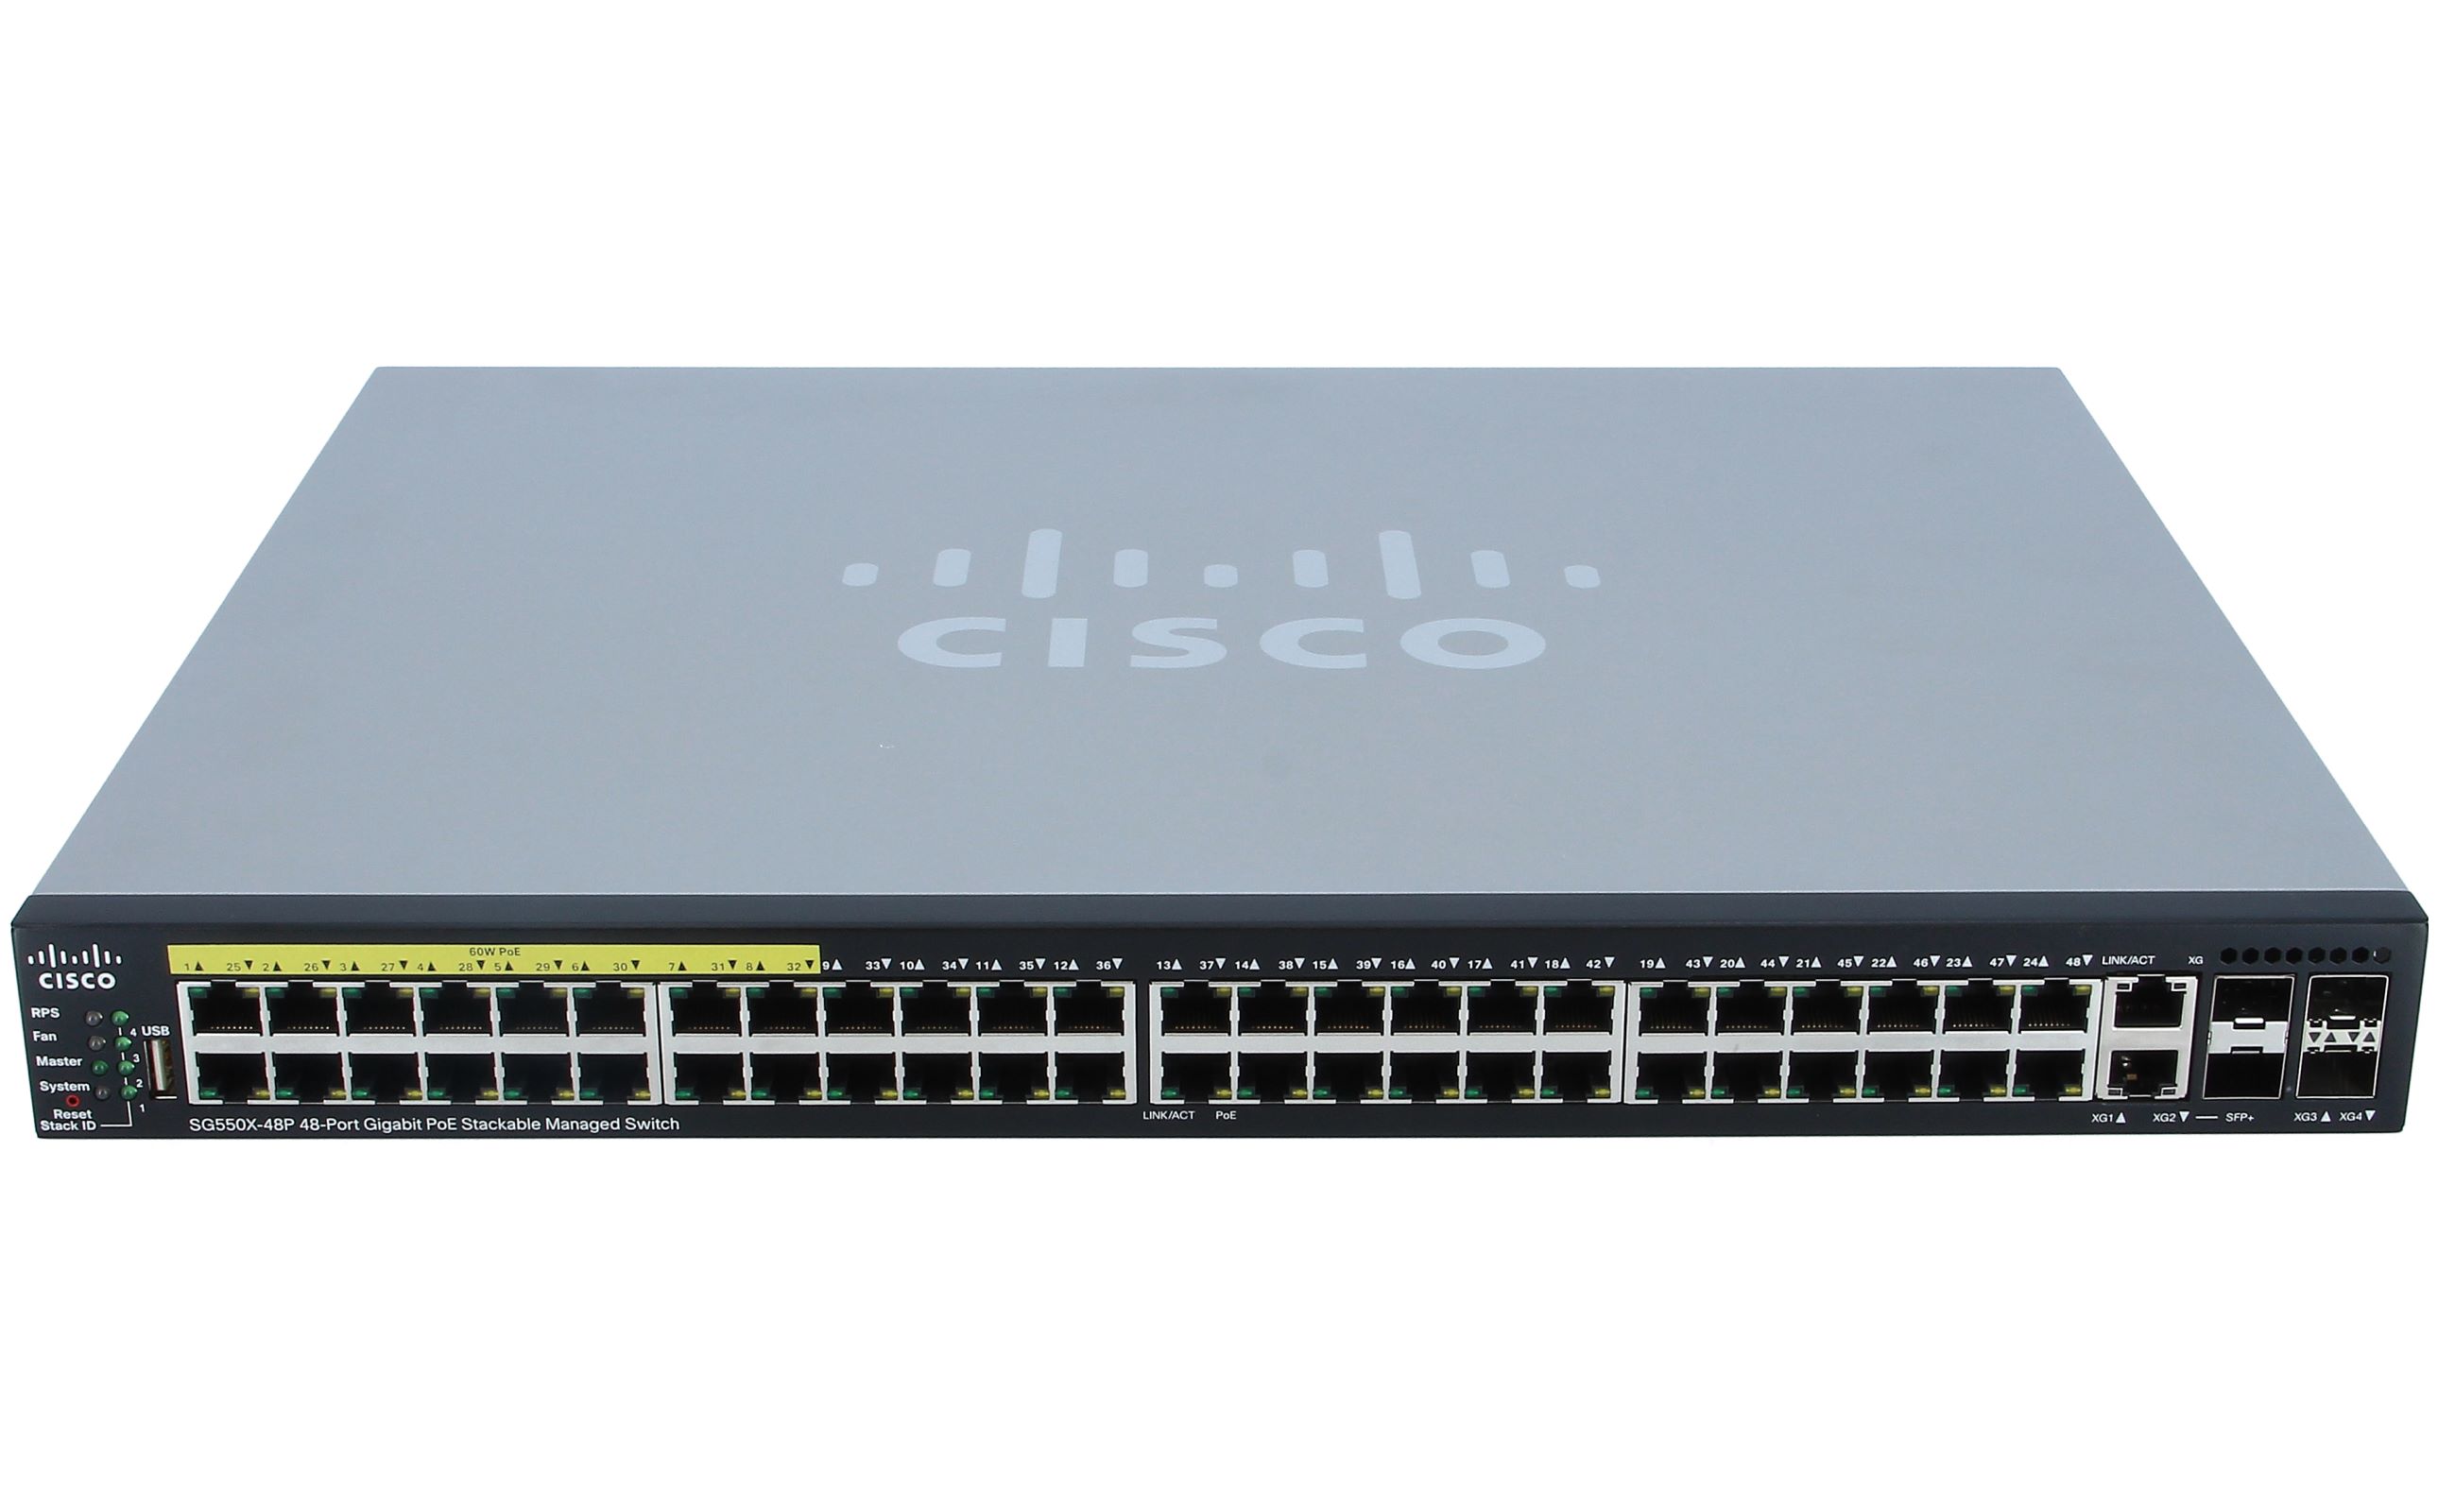 Cisco port gigabit switch